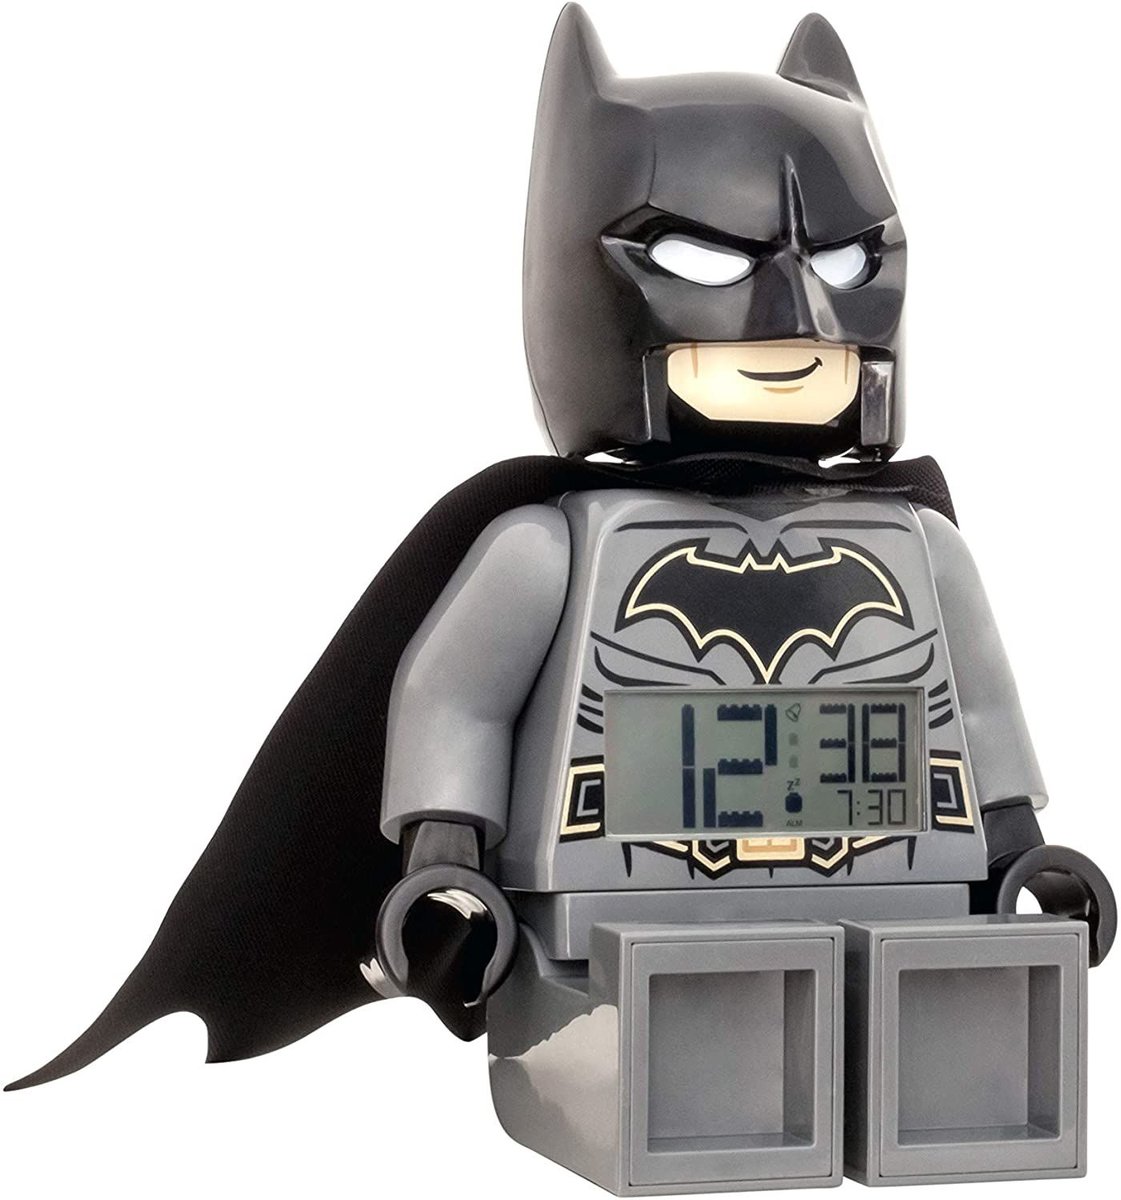 Lego Klocki Figurka Batman Budzik Sklep Empik Com - figurki roblox game box pop 4 szt